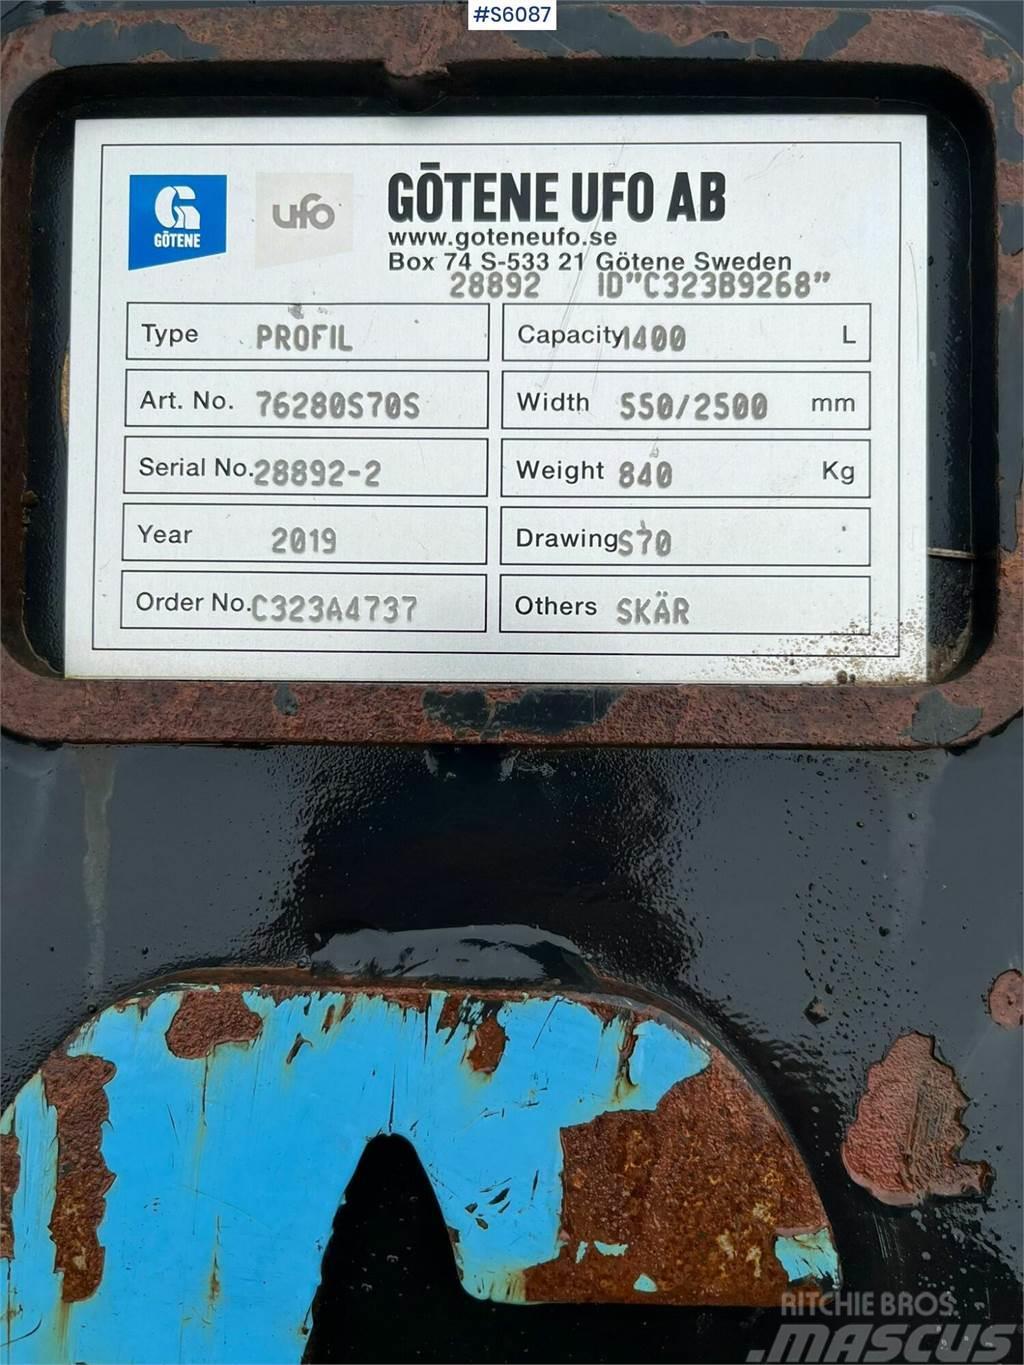 Götene UFO S70 Profile bucket Godet